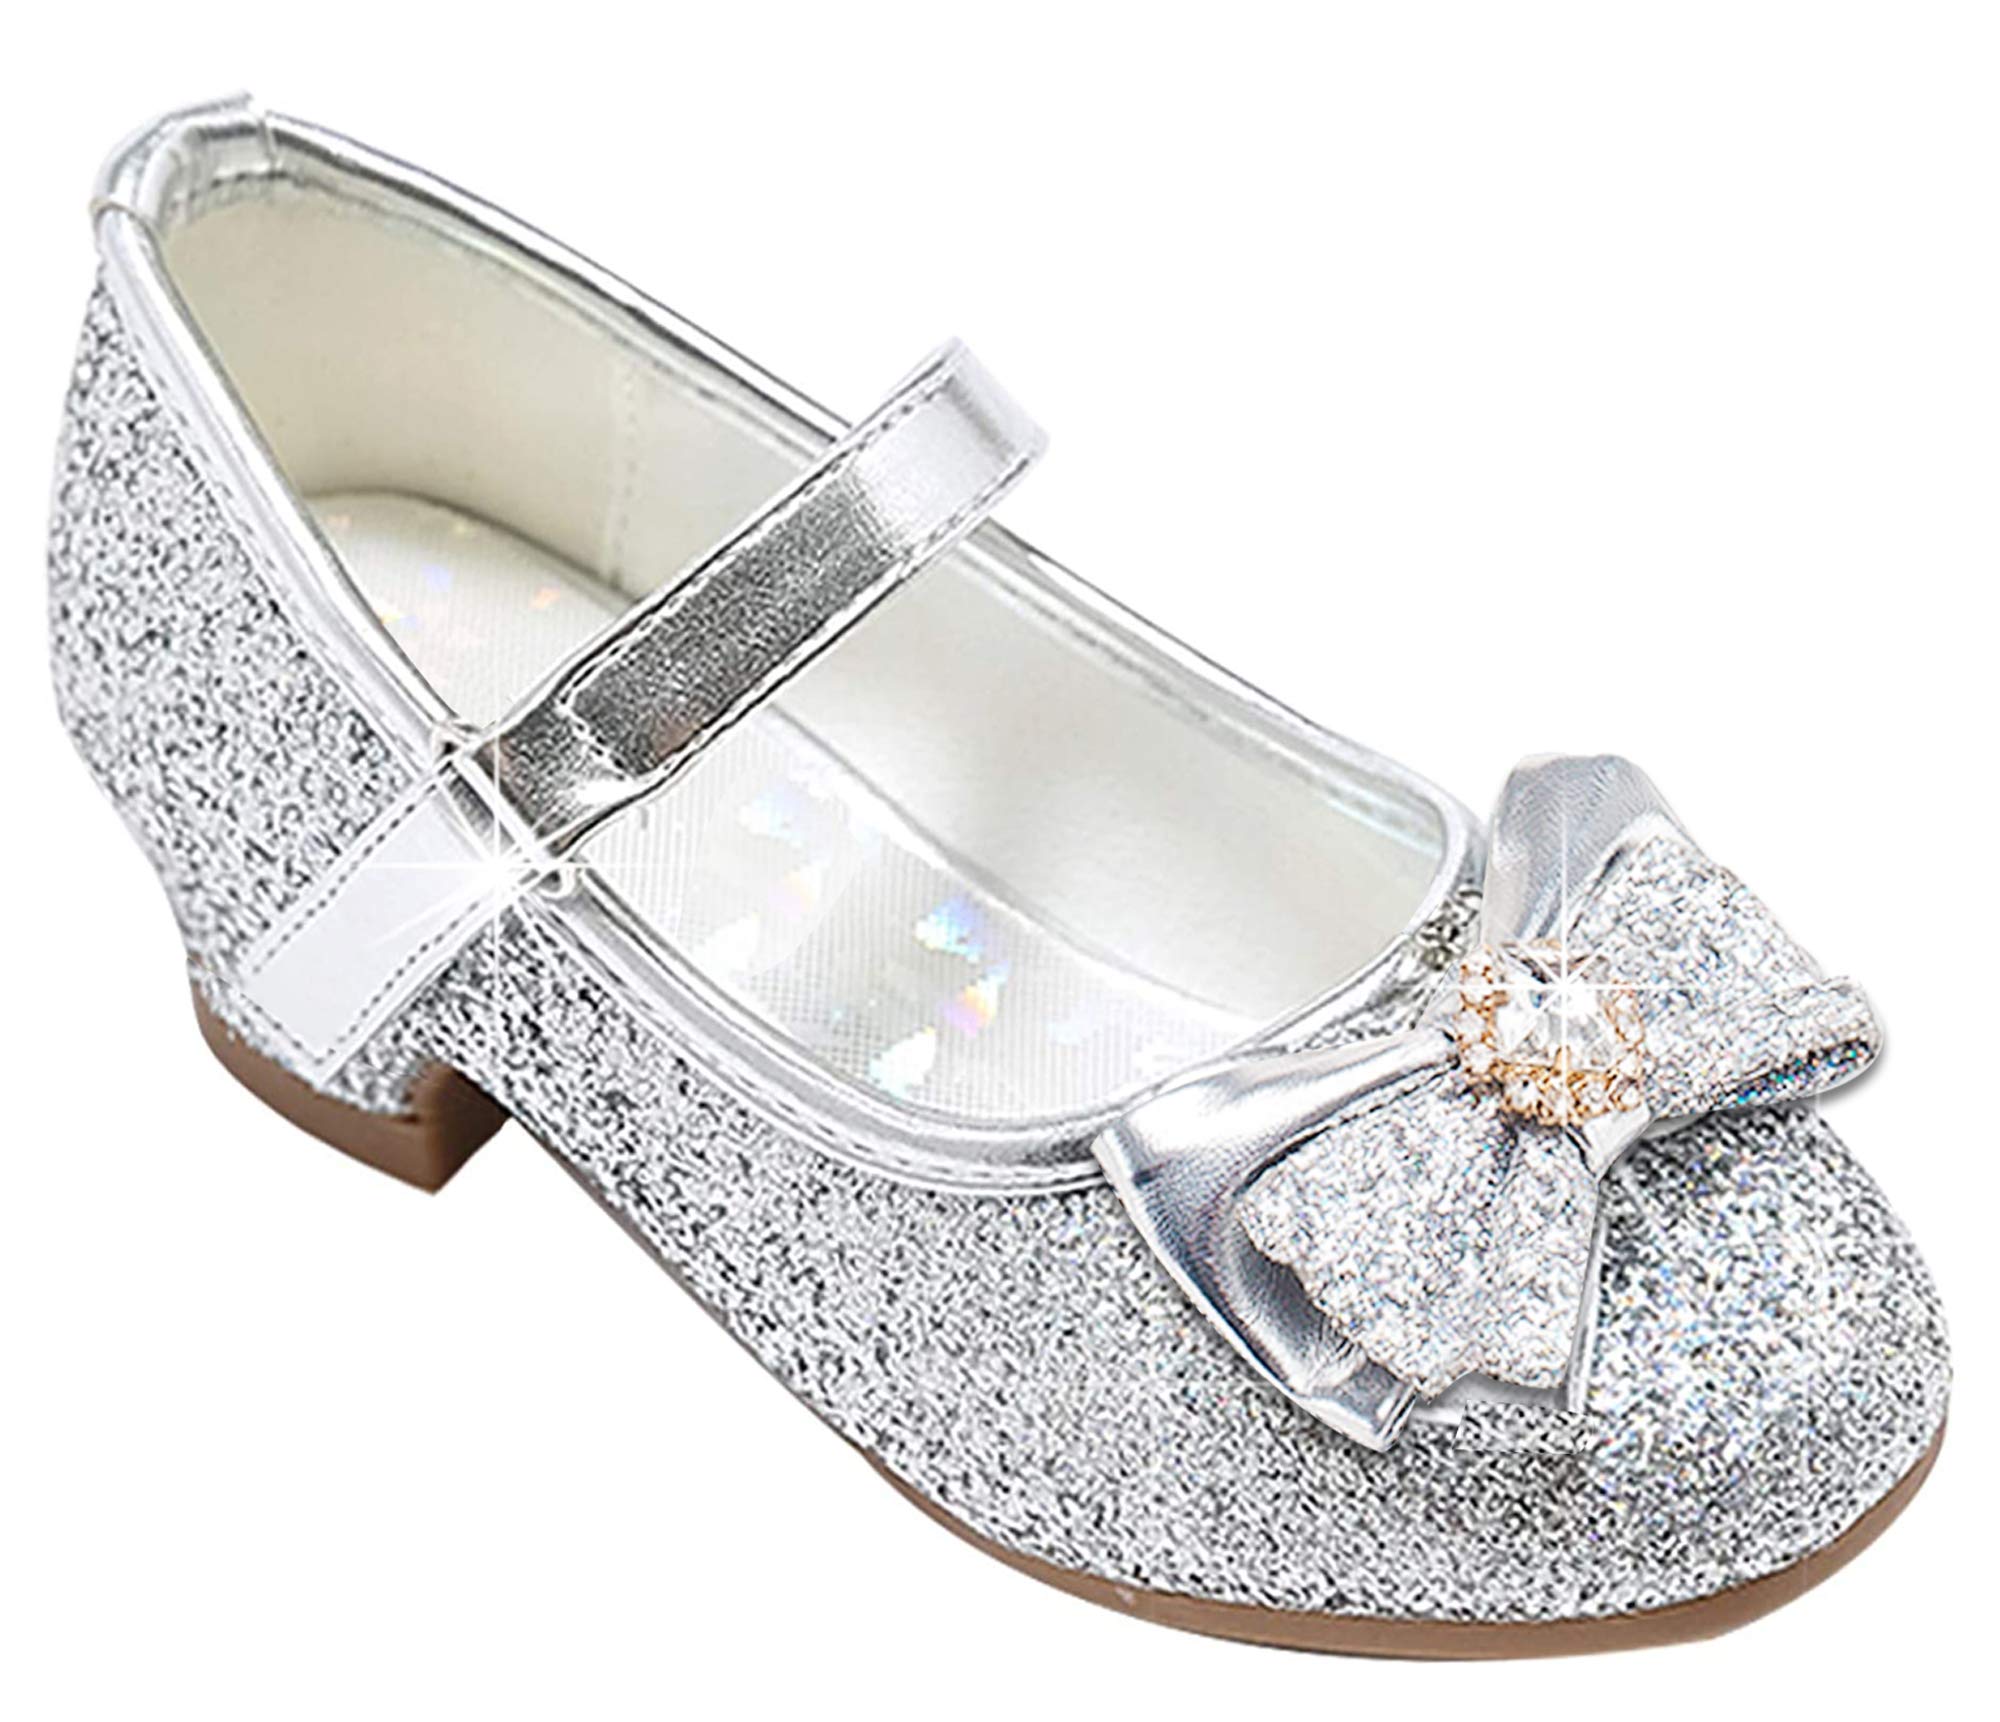 Furdeour Toddler girl Princess Shoes for girls Size 8 Wedding Flower girl Party Shoes Medium High Heels glitter Little Kids Silv